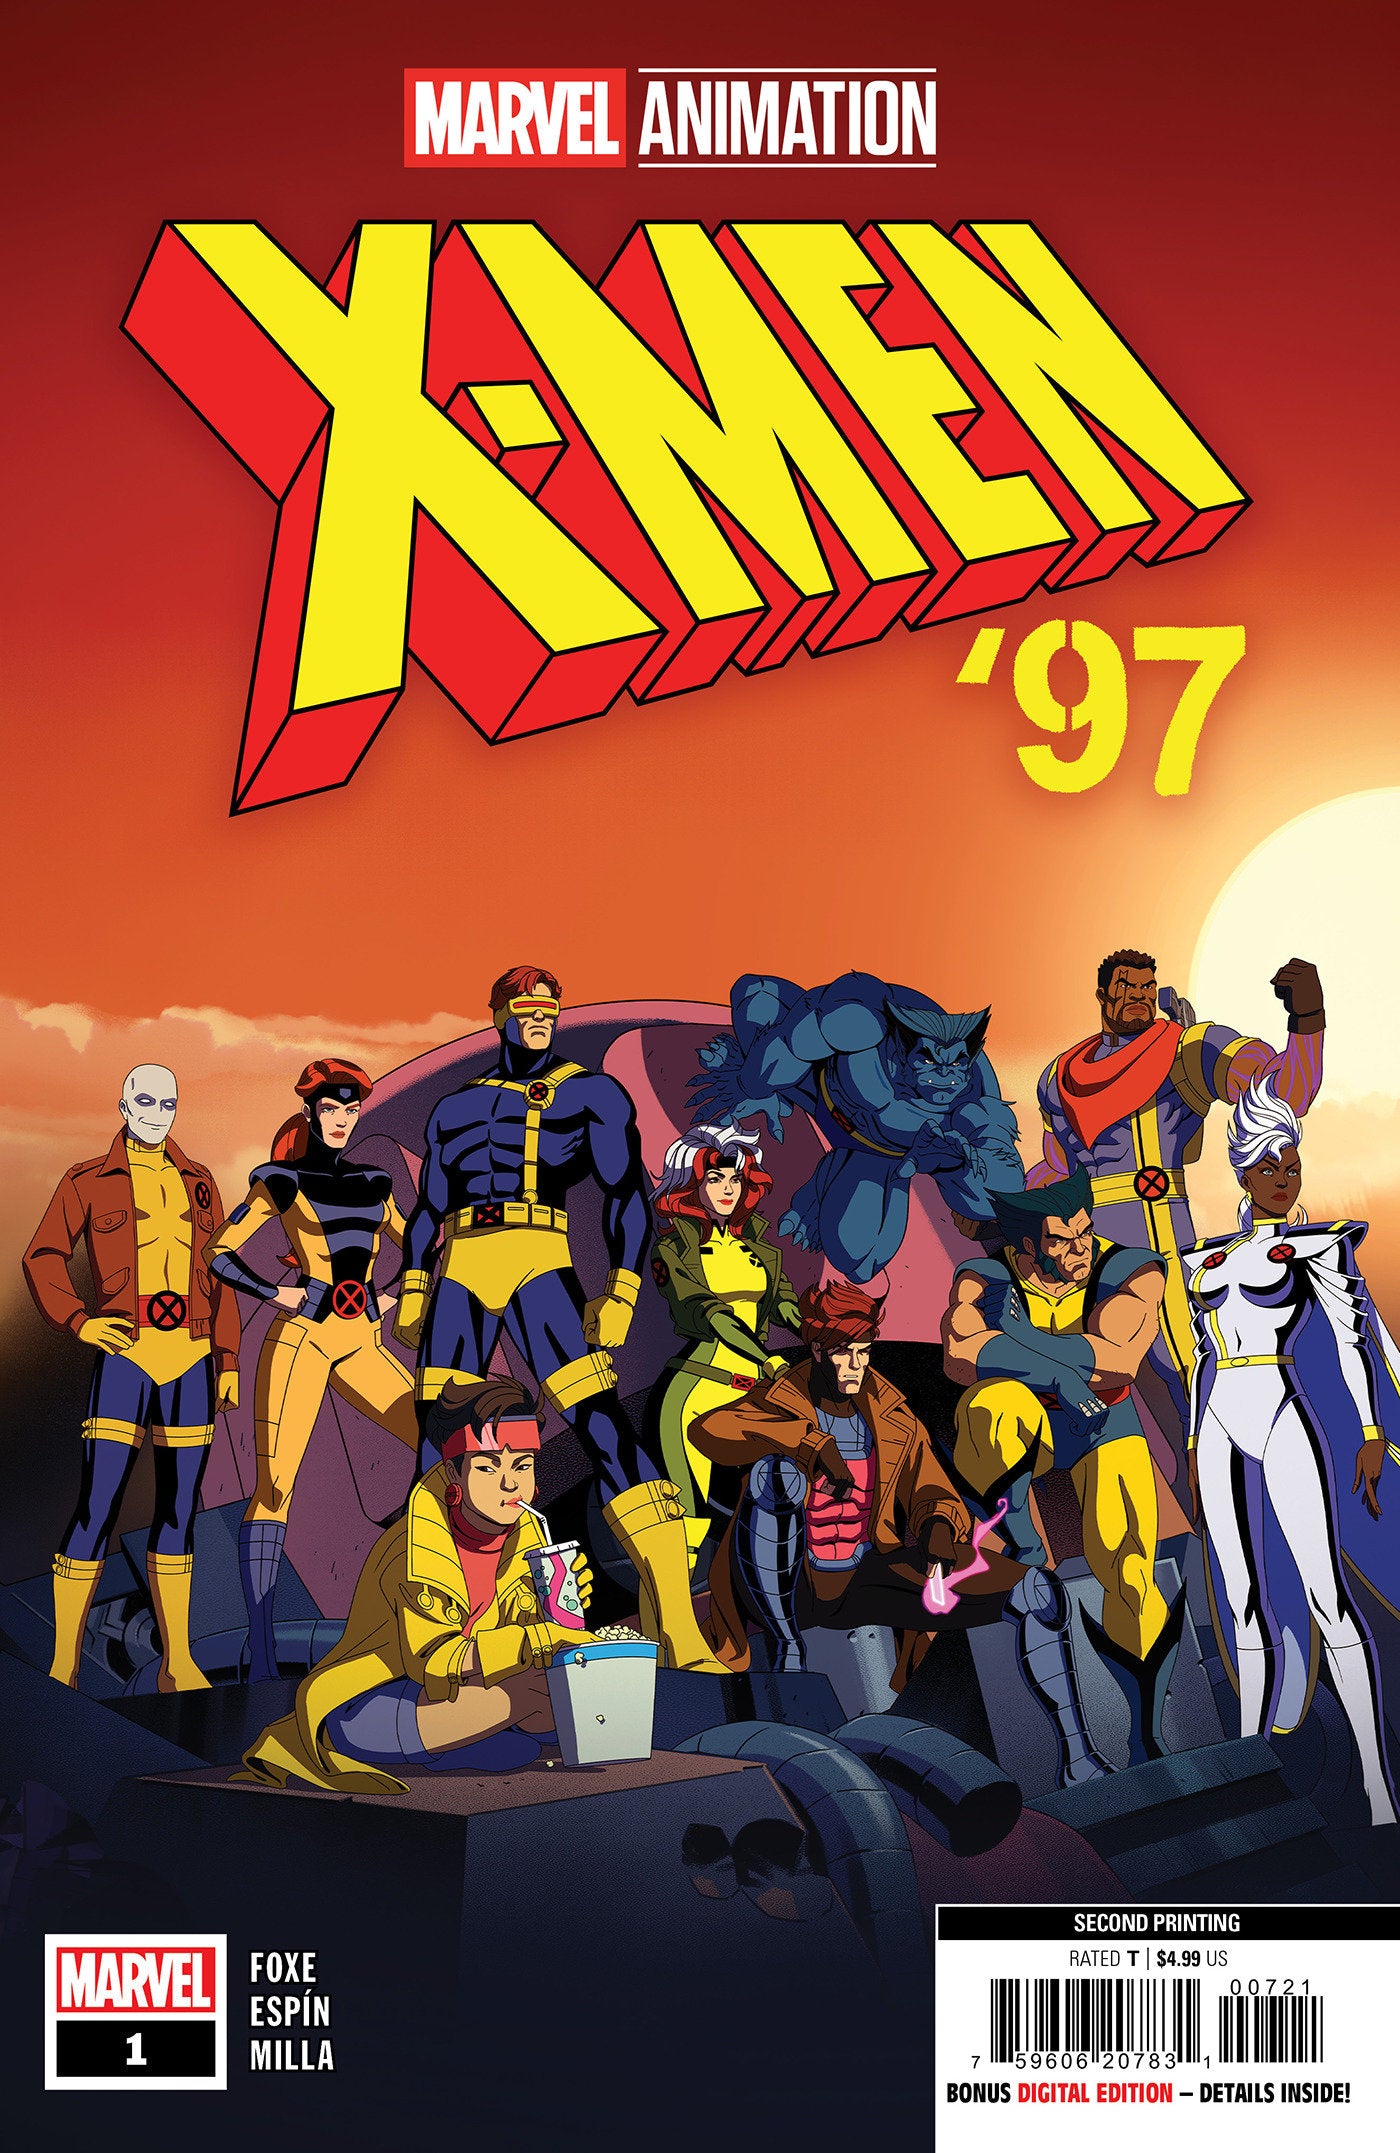 X-Men '97 #1 2e impression Marvel Animation 05/08/2024 | BD Cosmos